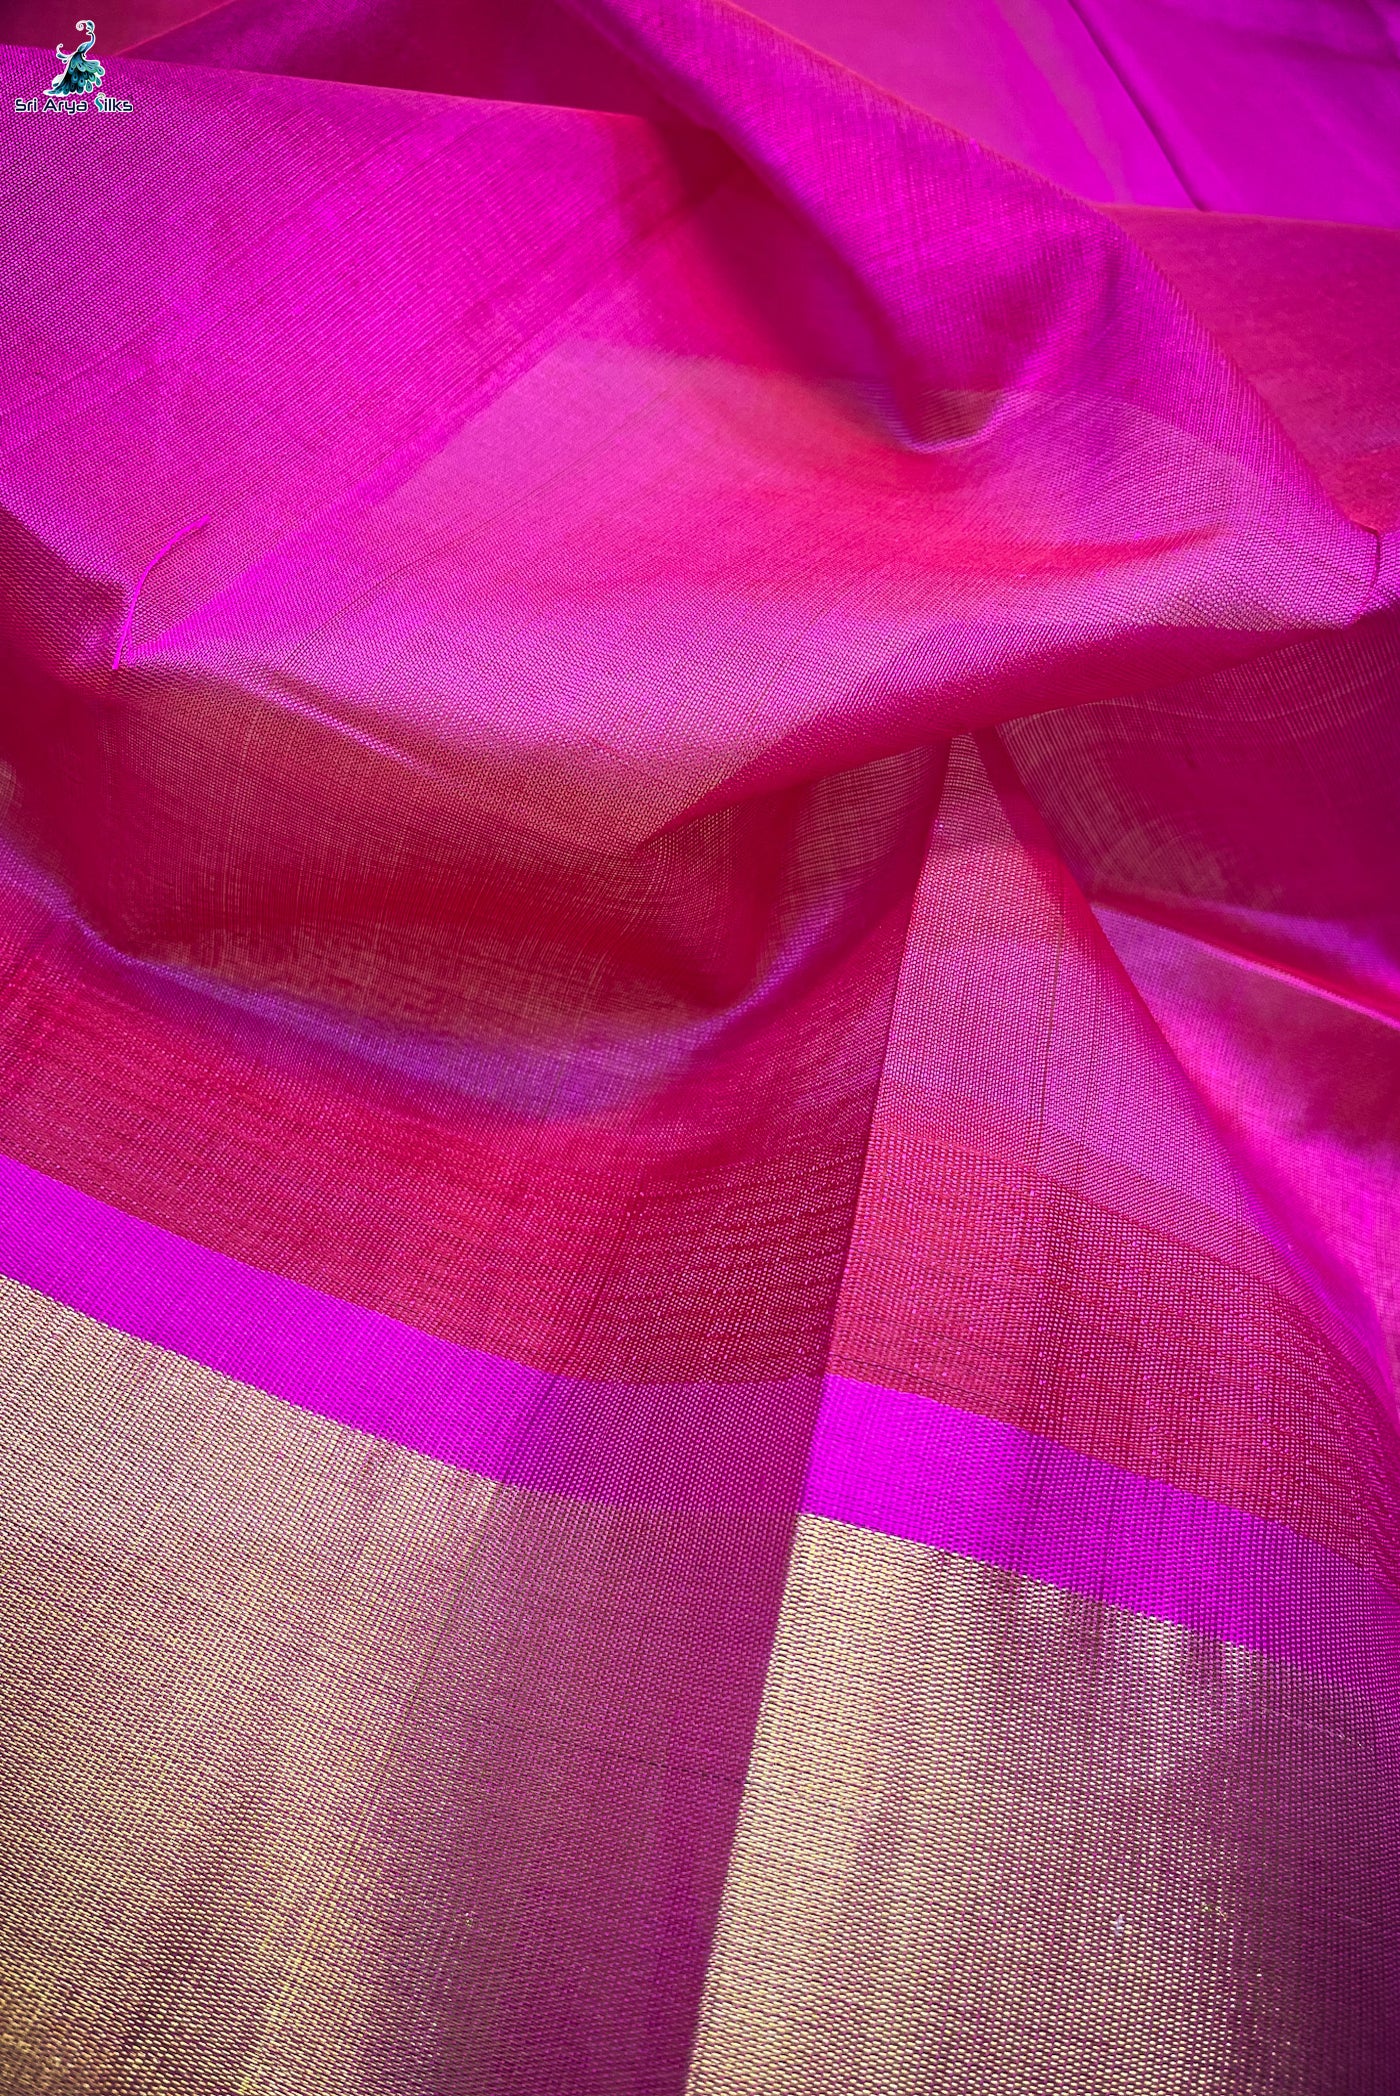 Beige Korvai Silk Cotton Saree With Plain Pattern